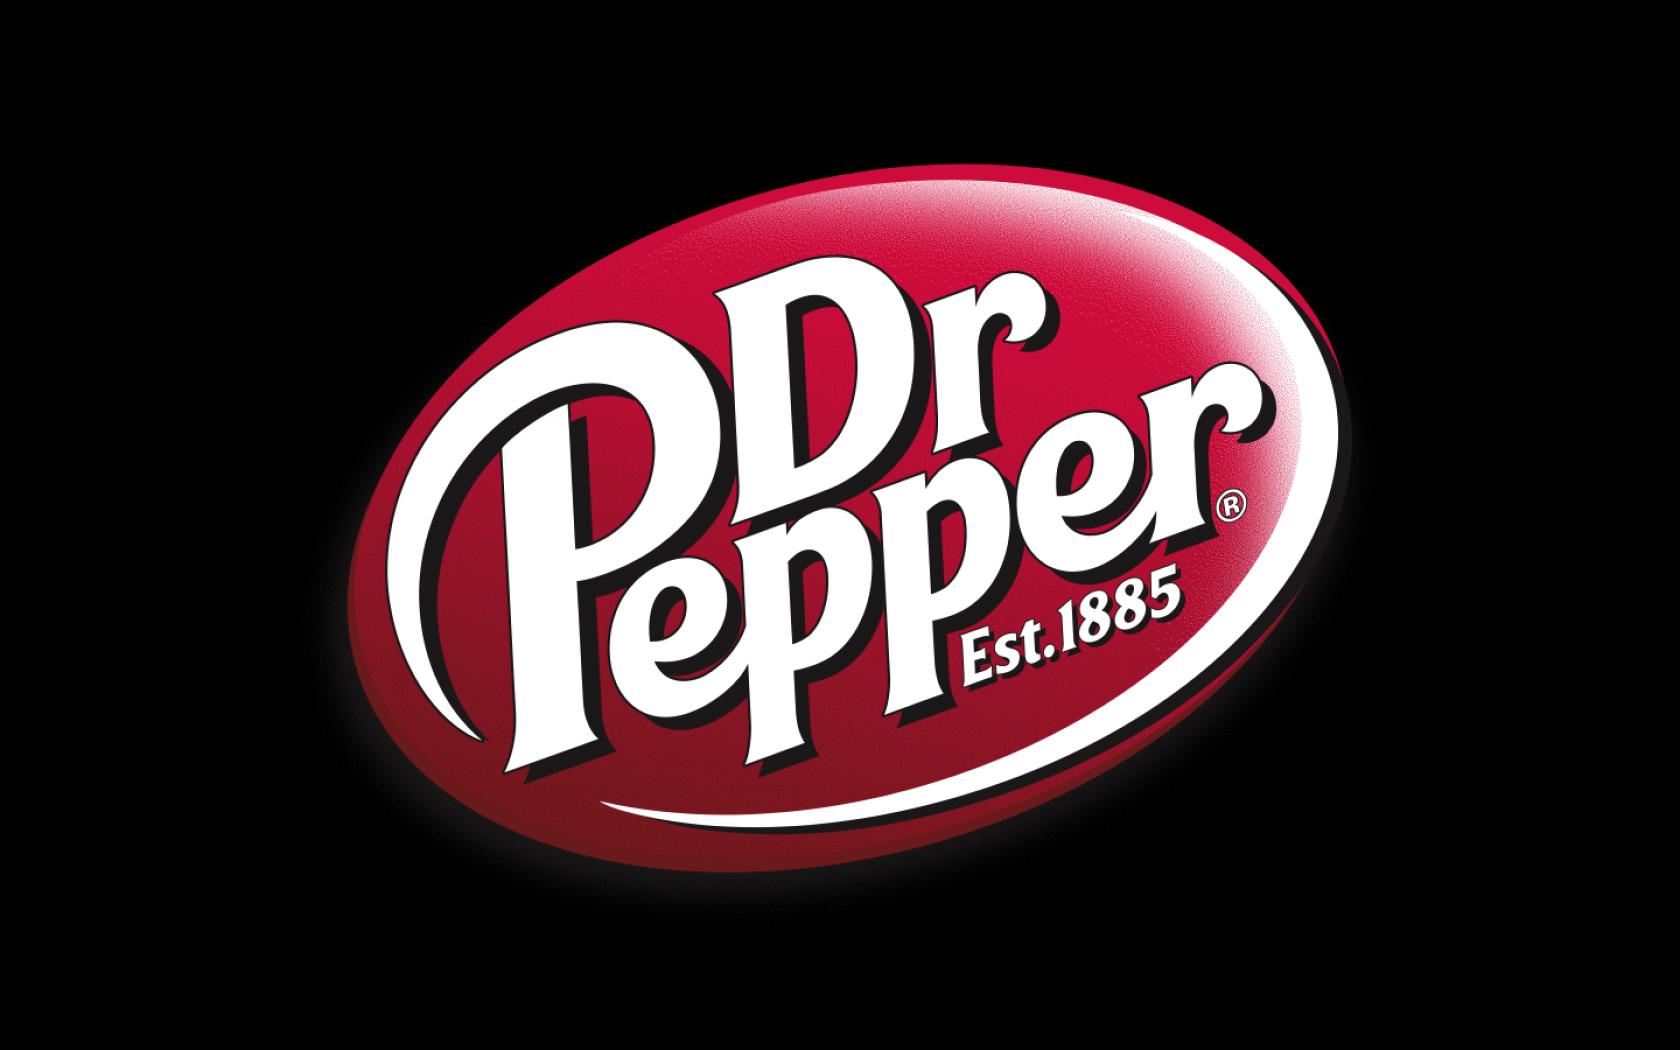 Dr Pepper Logos Black Background Onf6